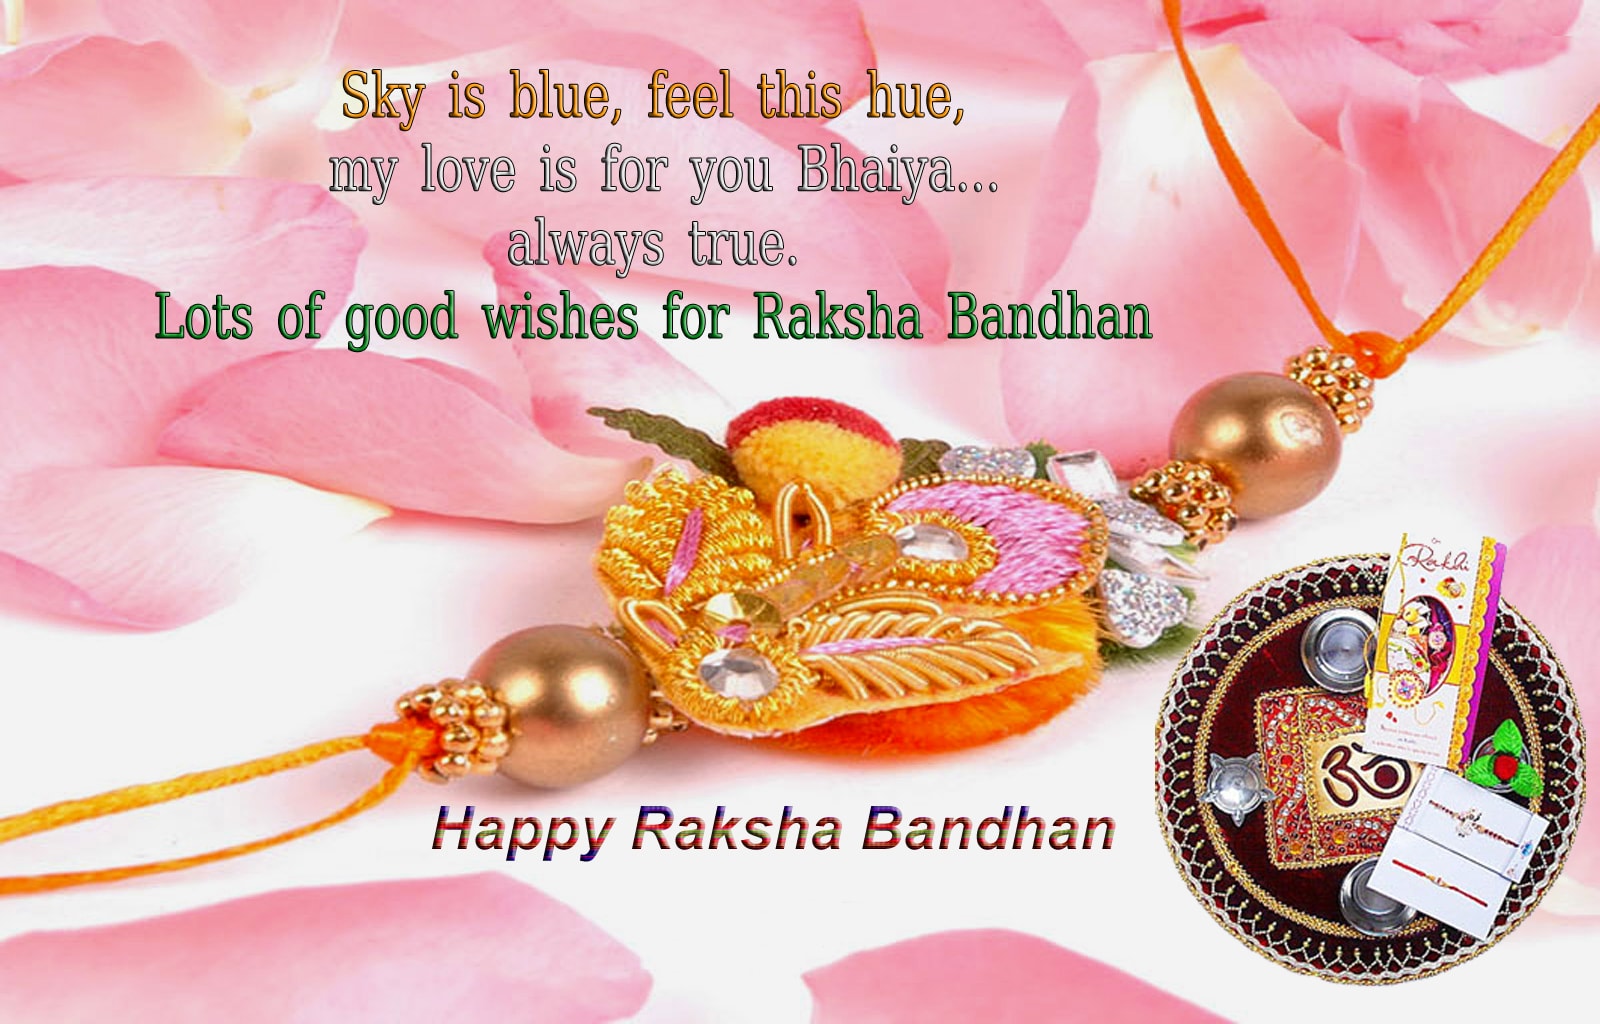 a short speech on raksha bandhan